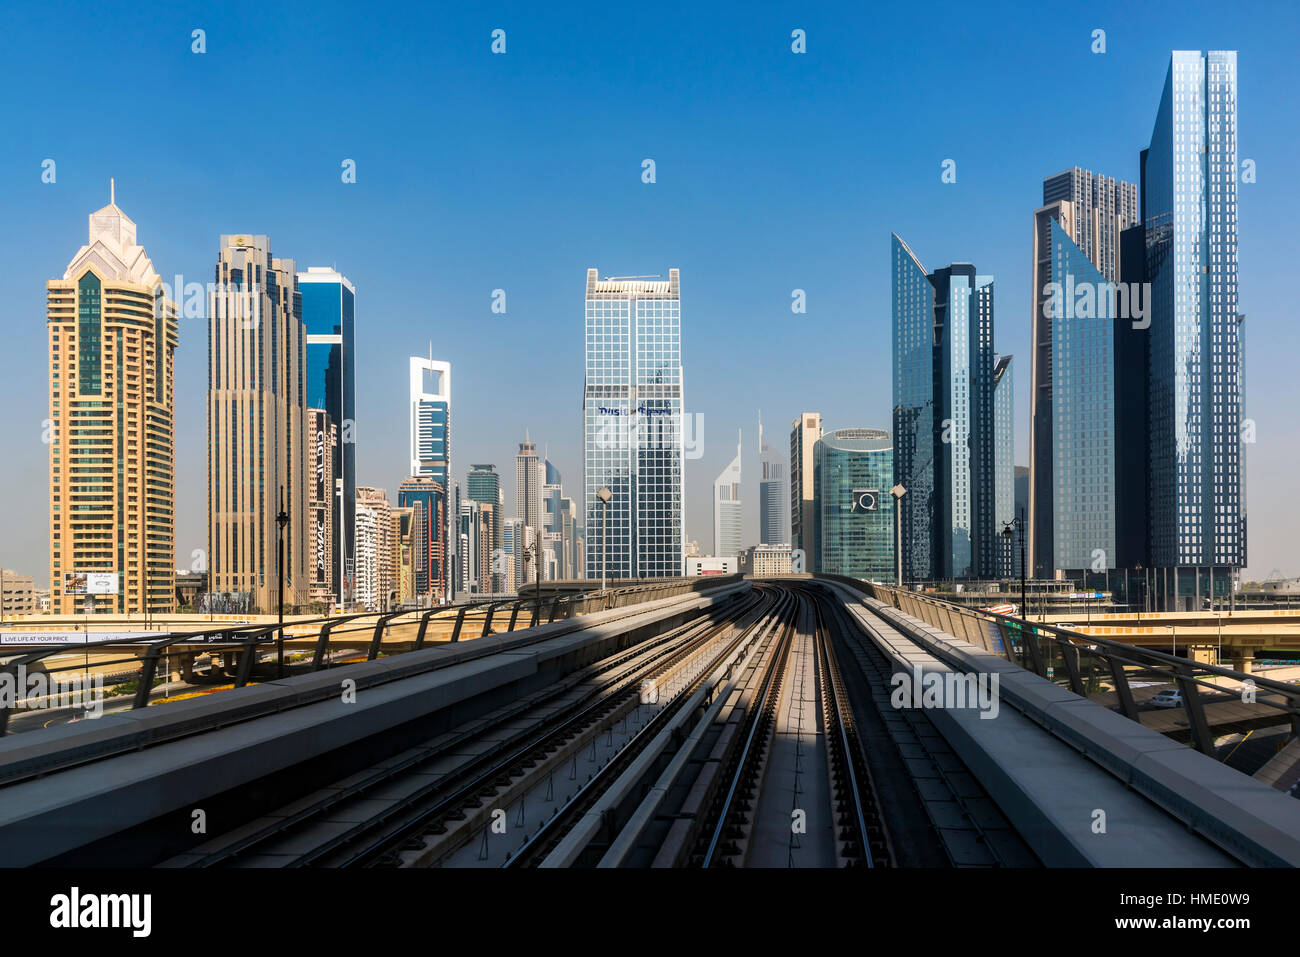 Downtown skyline as seen from the metro train, Dubai, United Arab Emirates Stock Photo